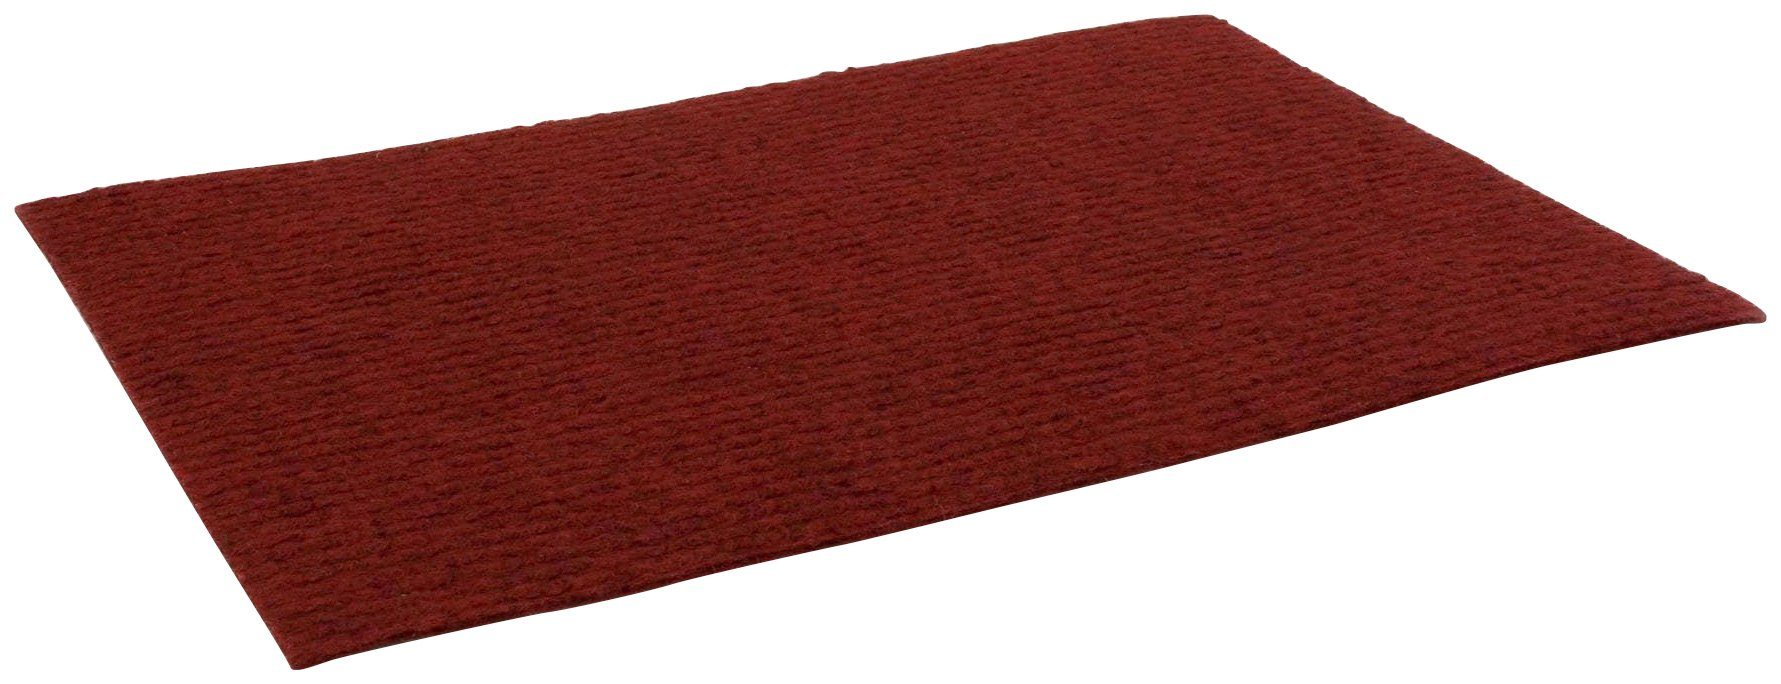 Nadelvliesteppich MALTA, Primaflor-Ideen in Textil, rechteckig, Höhe: 2,5 mm, strapazierfähig, Uni-Farben, Kurzflor Teppich, Nadelvlies rot